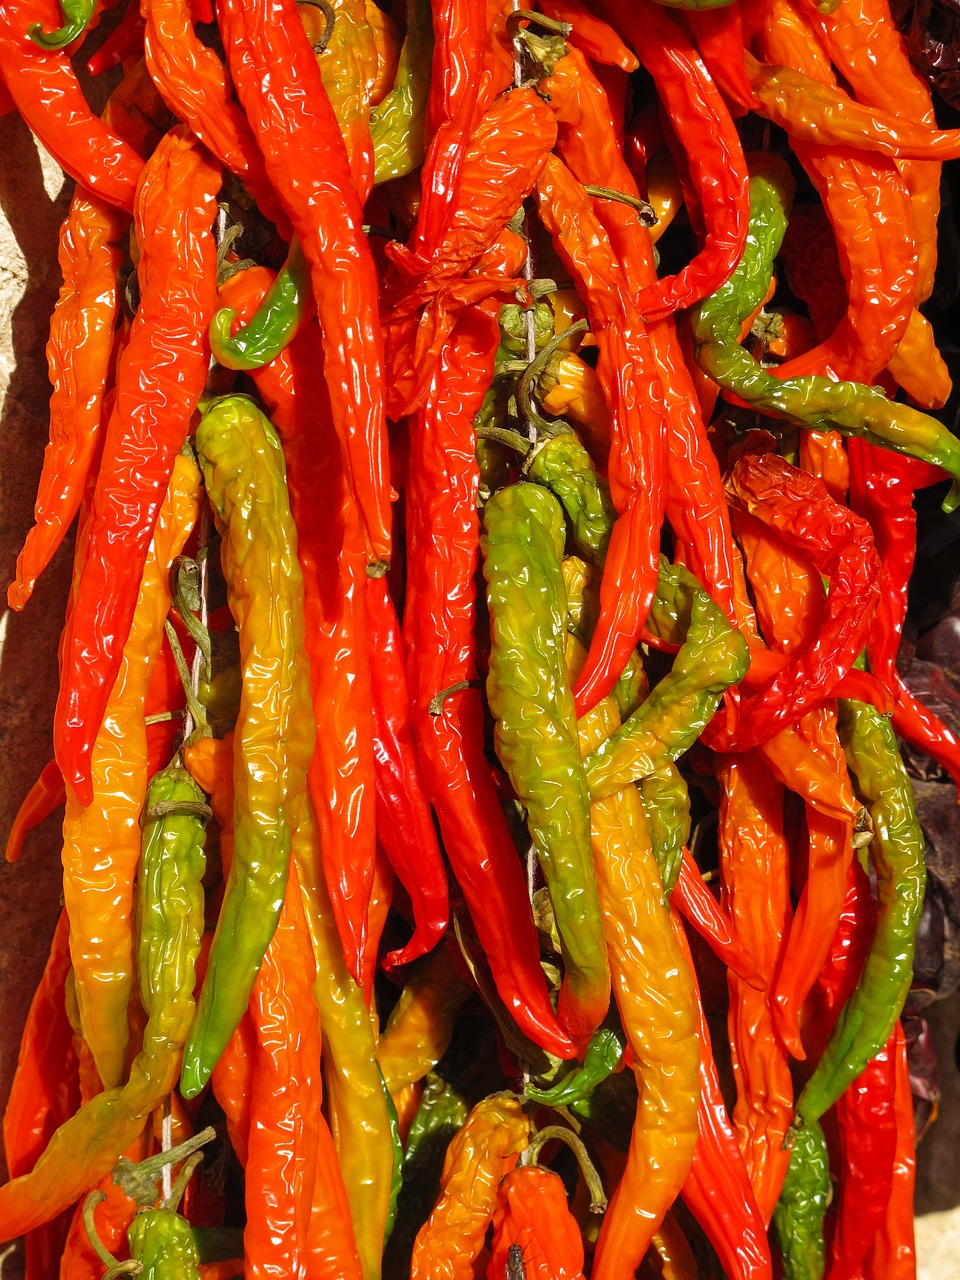 Chili,pepperoni,paprika,spice,colorful - free image from needpix.com